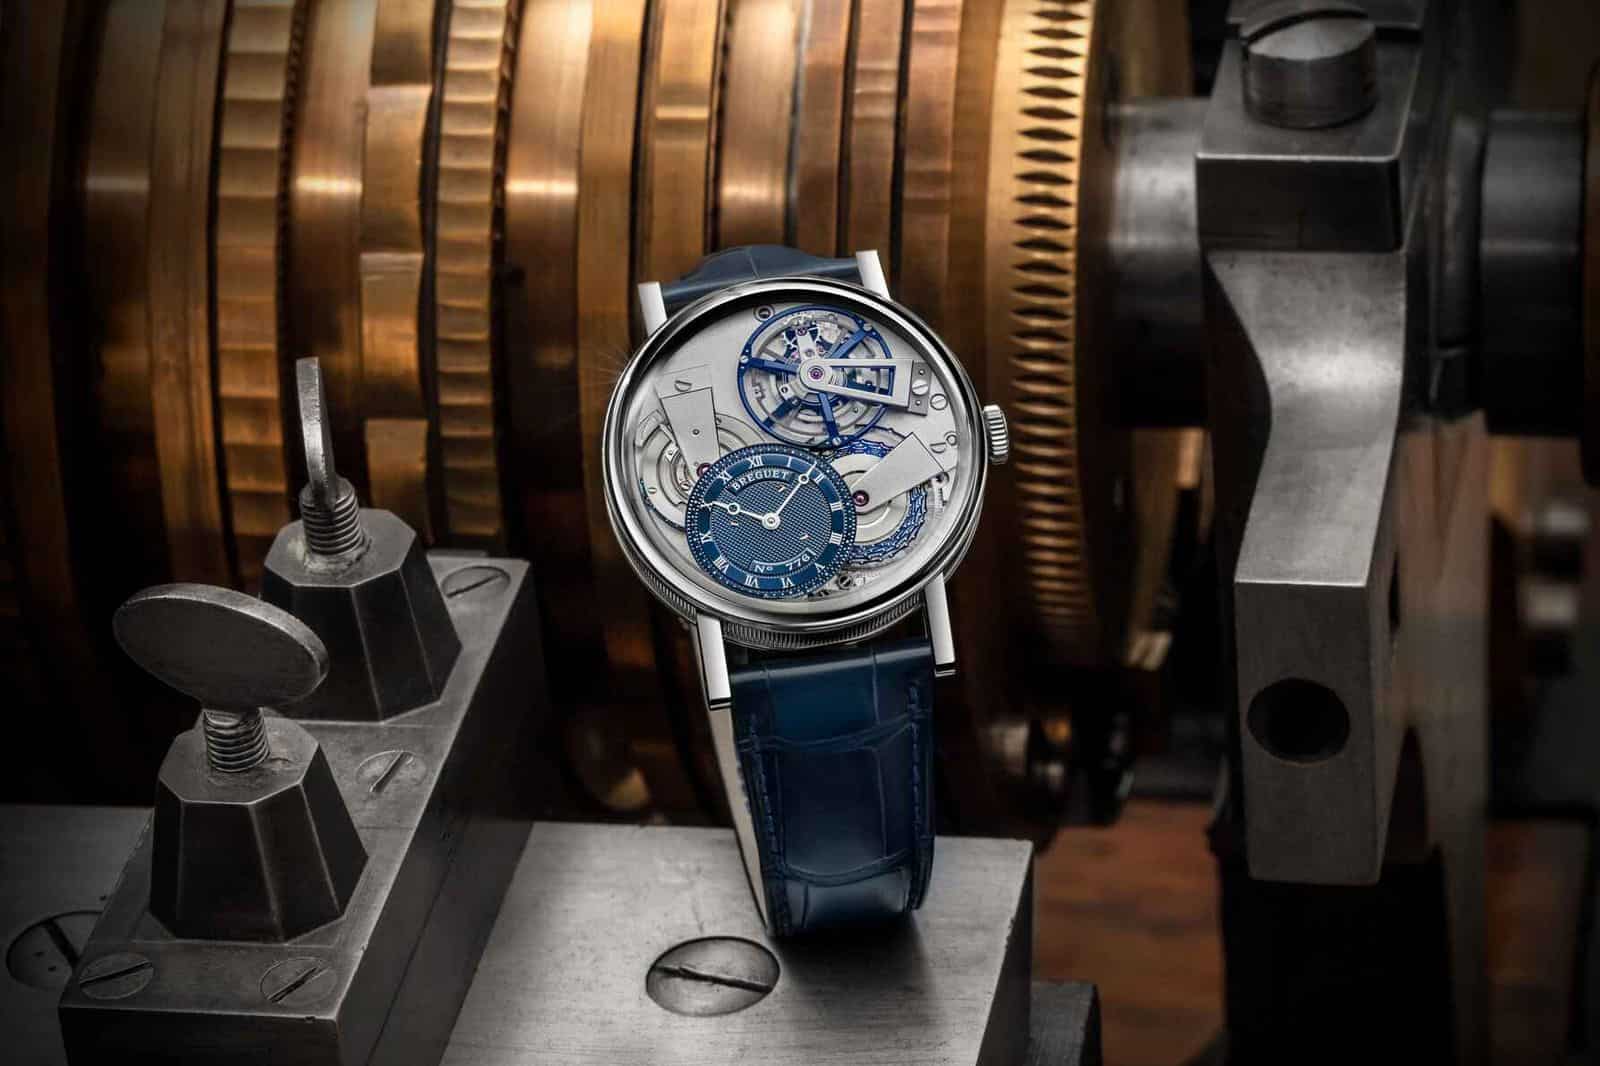 Breguet, მისი უახლესი მოდელი Tradition კოლექციიდან, რომელიც იხსენებს Tourbillon საათის შექმნას Abraham-Louis-ის მიერ.